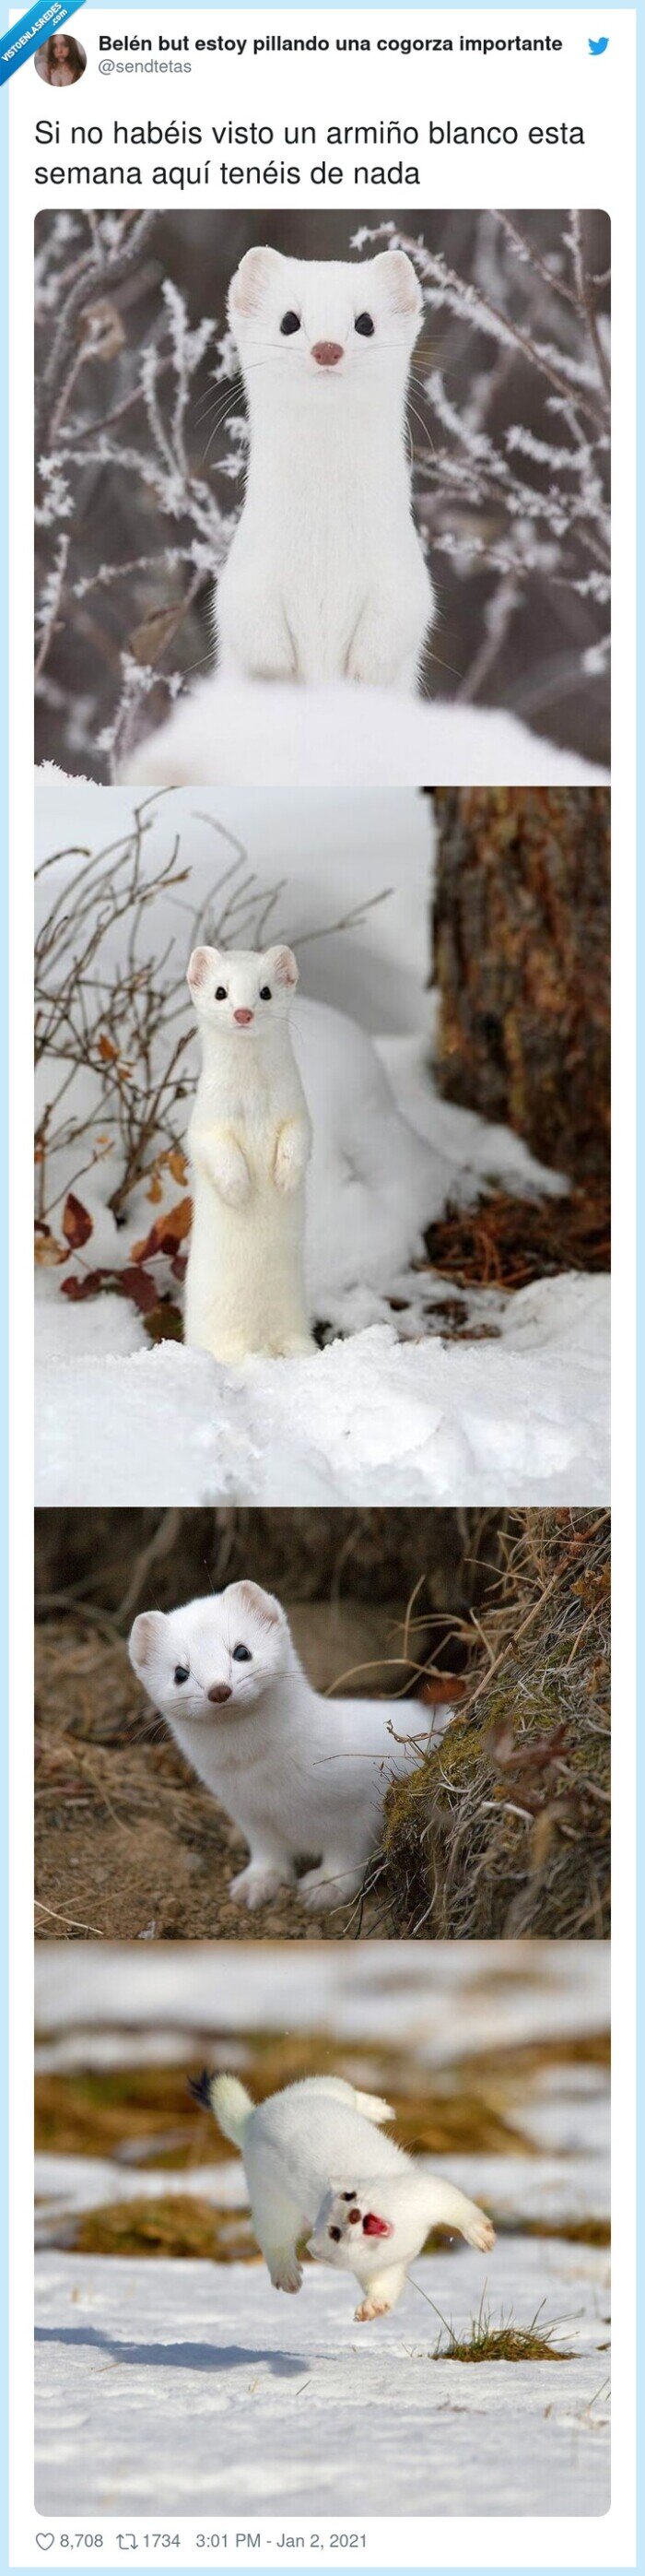 armiño blanco,animal,nieve